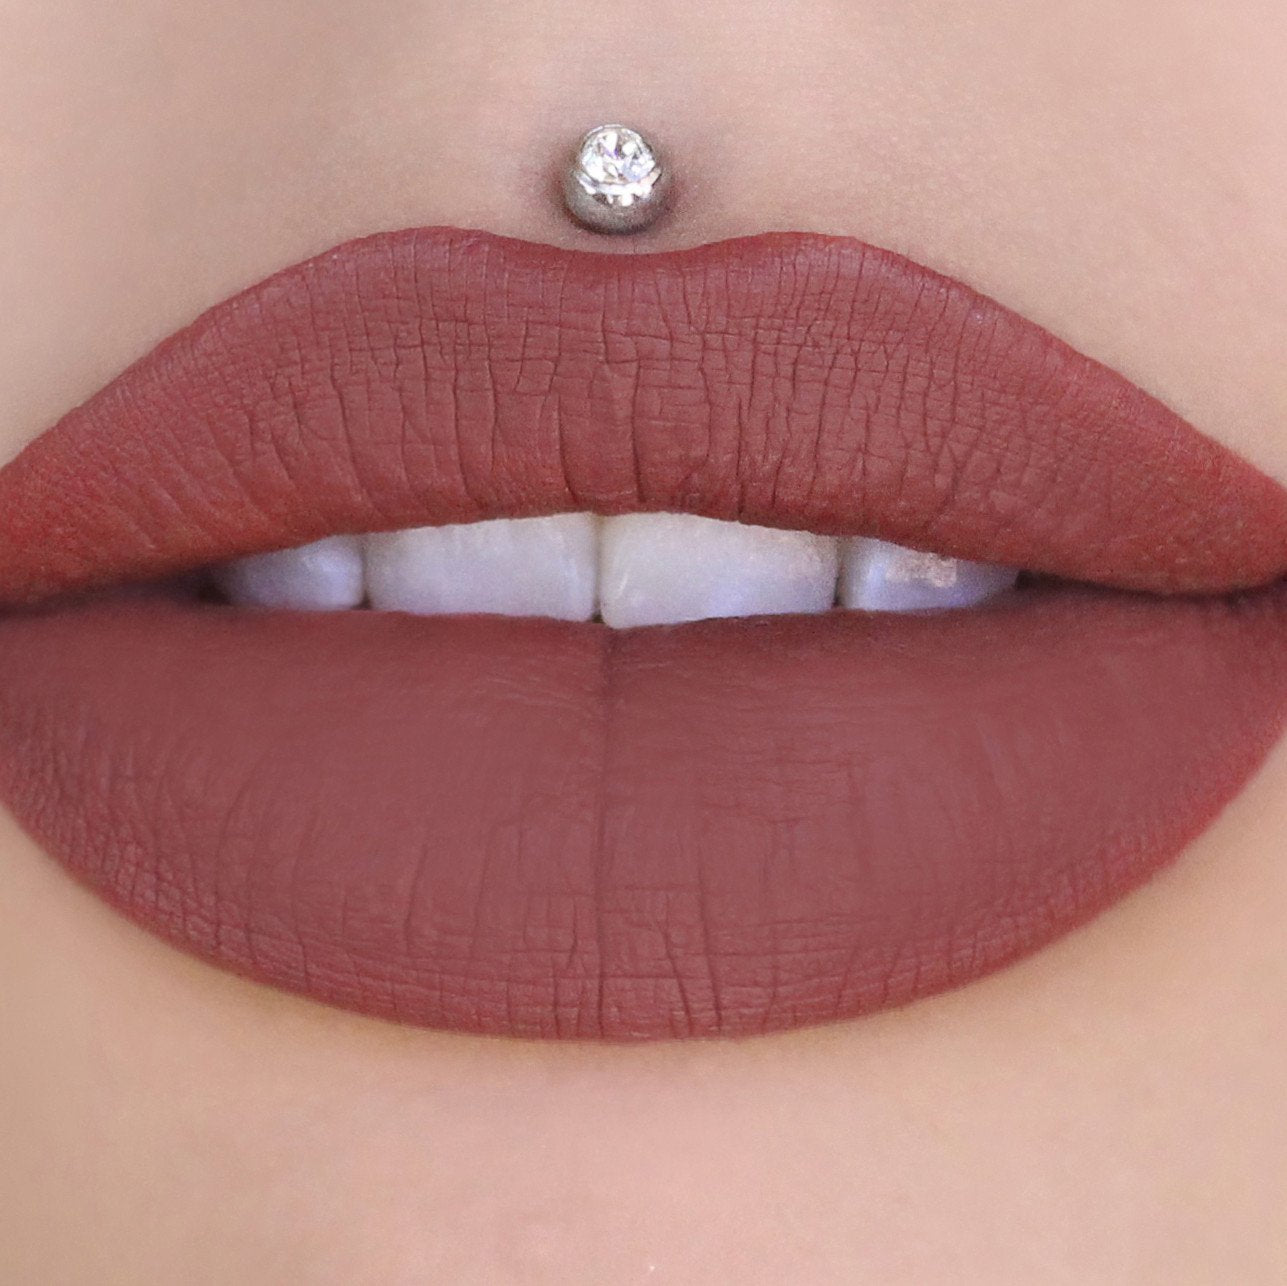 Jeffree Star cosmetics | Velour Liquid Lipstick | Gemini